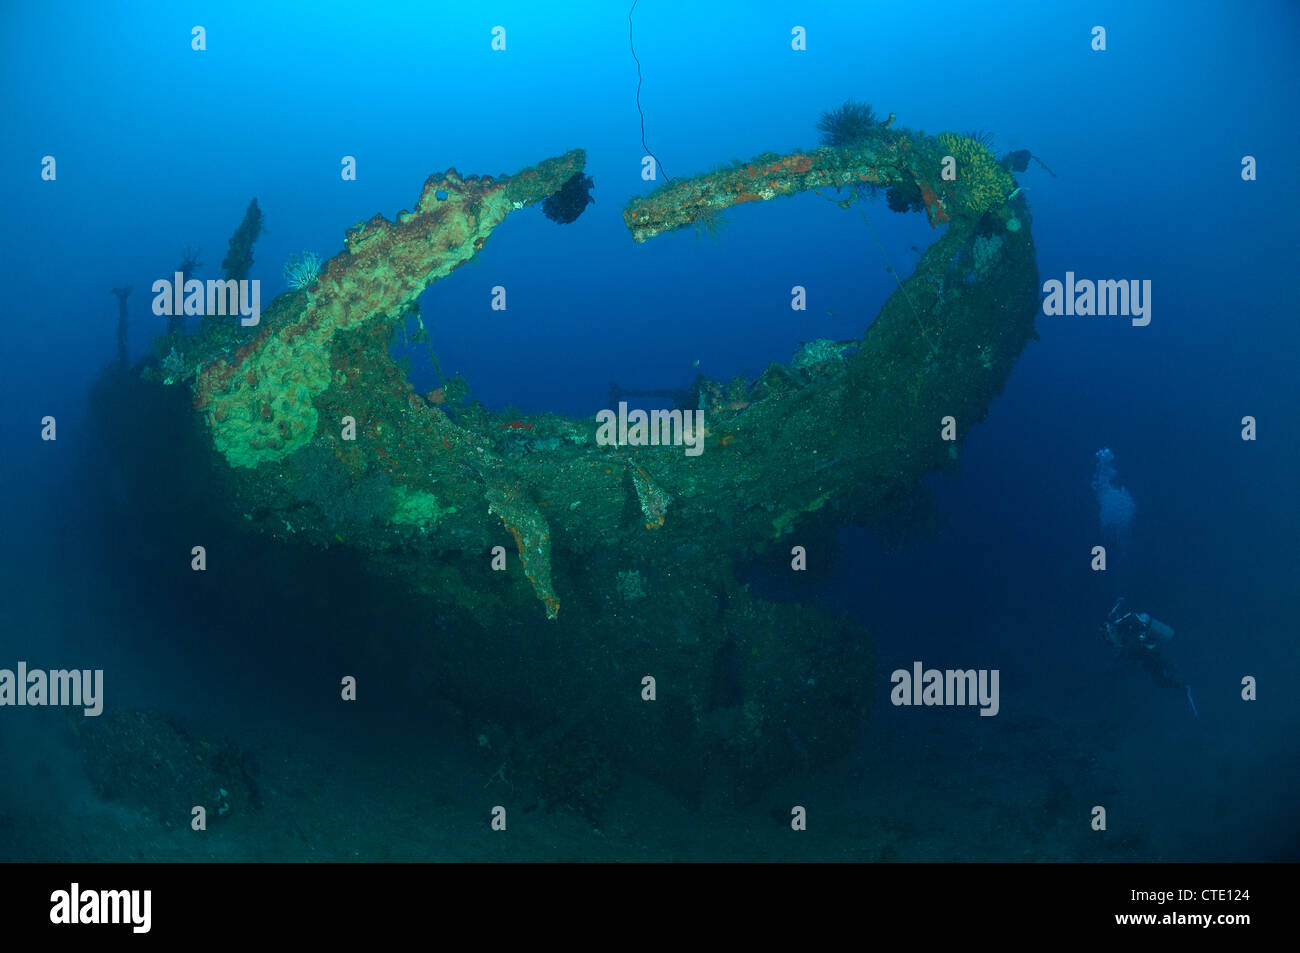 Stern of Manado Wreck, North Sulawesi, Indonesia Stock Photo